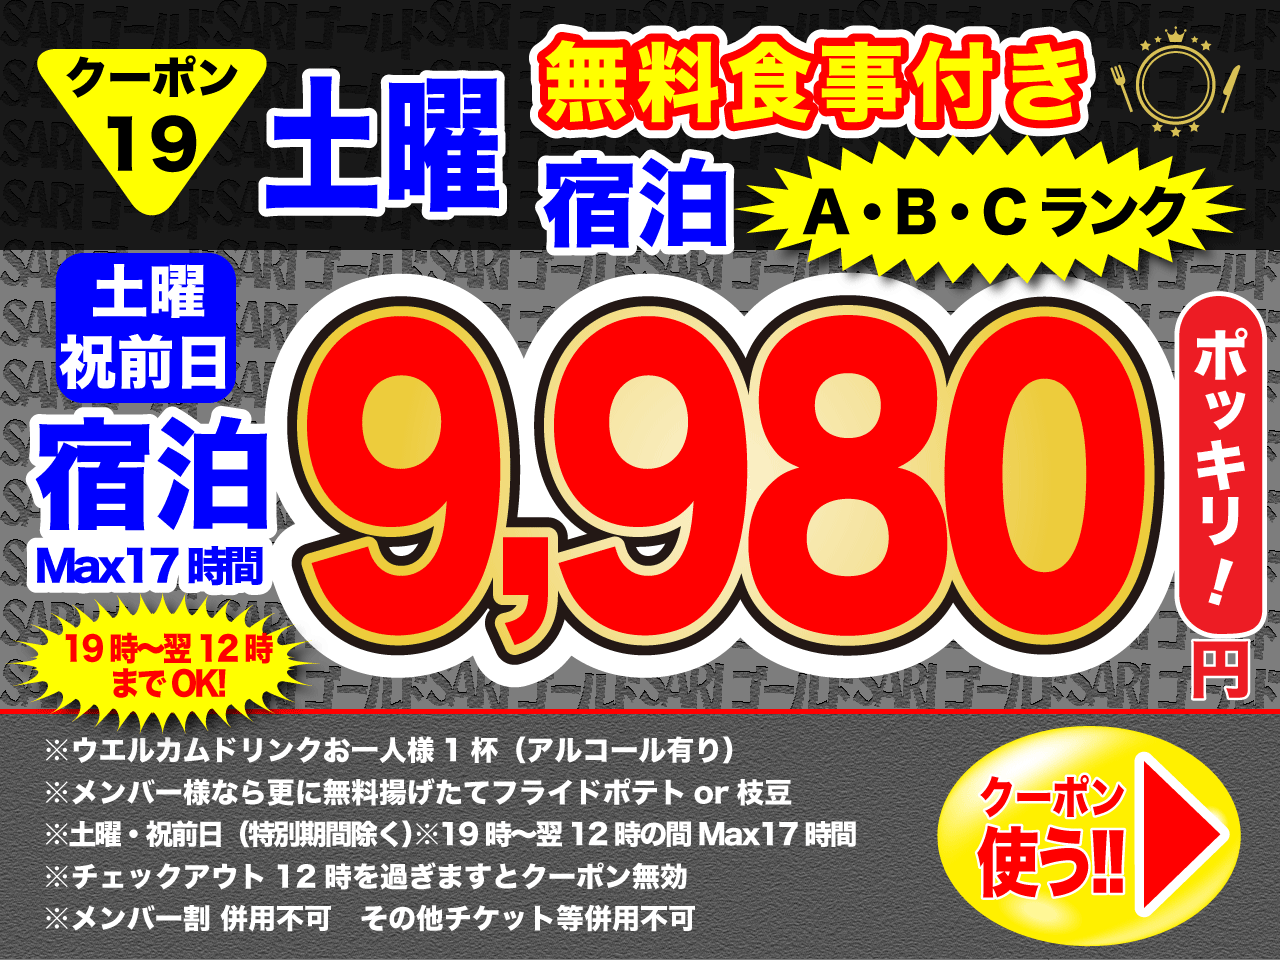 19 A・B・Cランク土曜・祝前宿泊9,980円